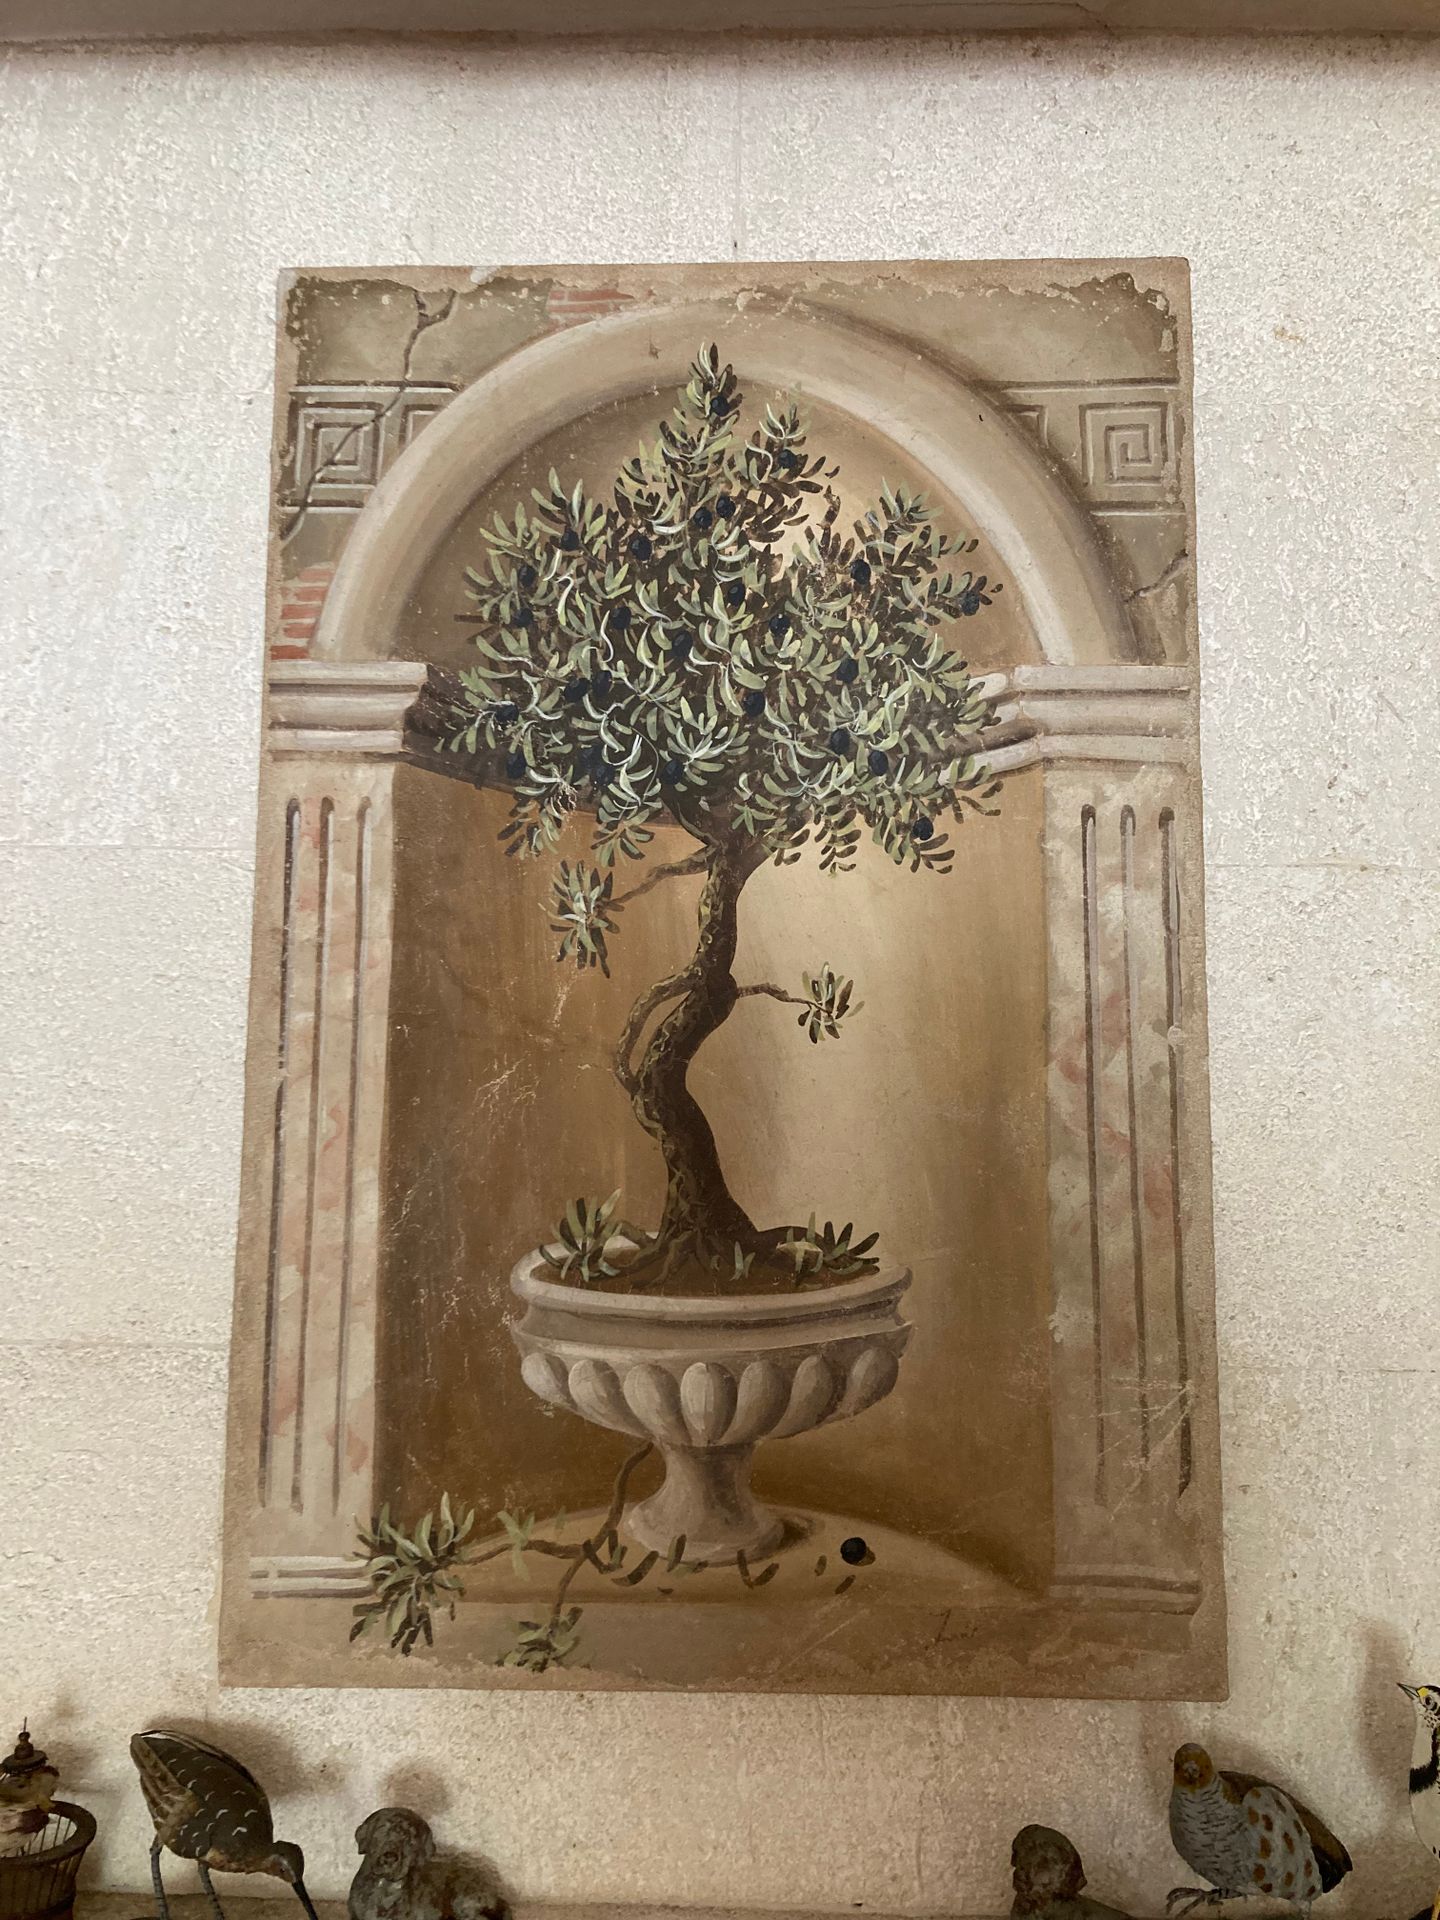 Null 法国学校。20世纪
带有壁龛中的橄榄树装饰的变形画
120x80厘米